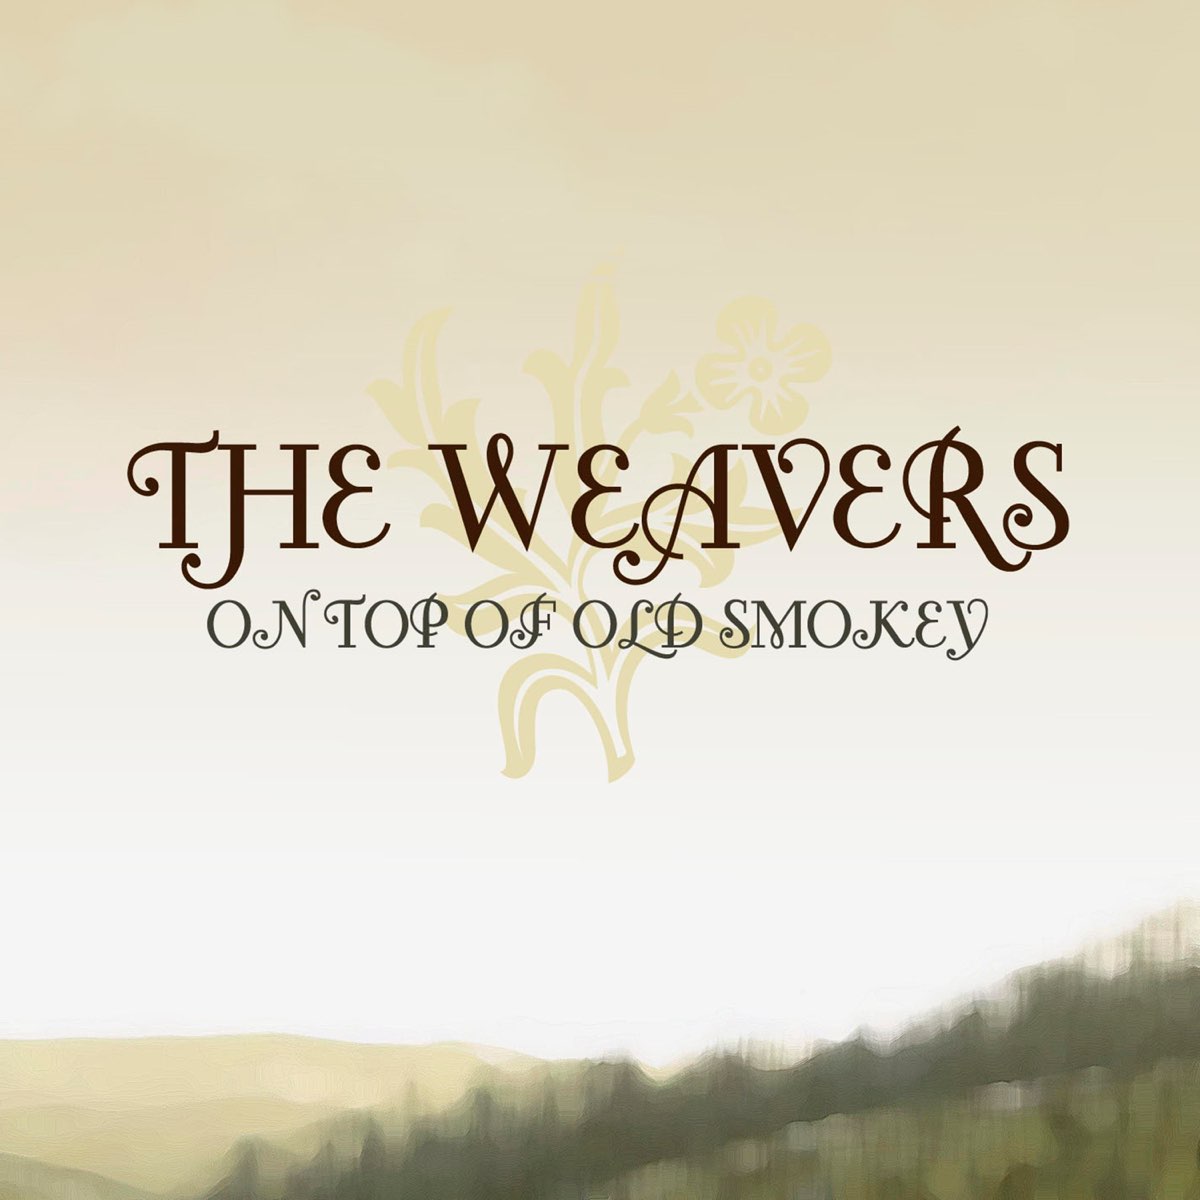 The Weavers on Top of old smokey. Goodnight Irene - Gordon Jenkins and the Weavers. The Woven Wild Studio. Weavers will last epoch